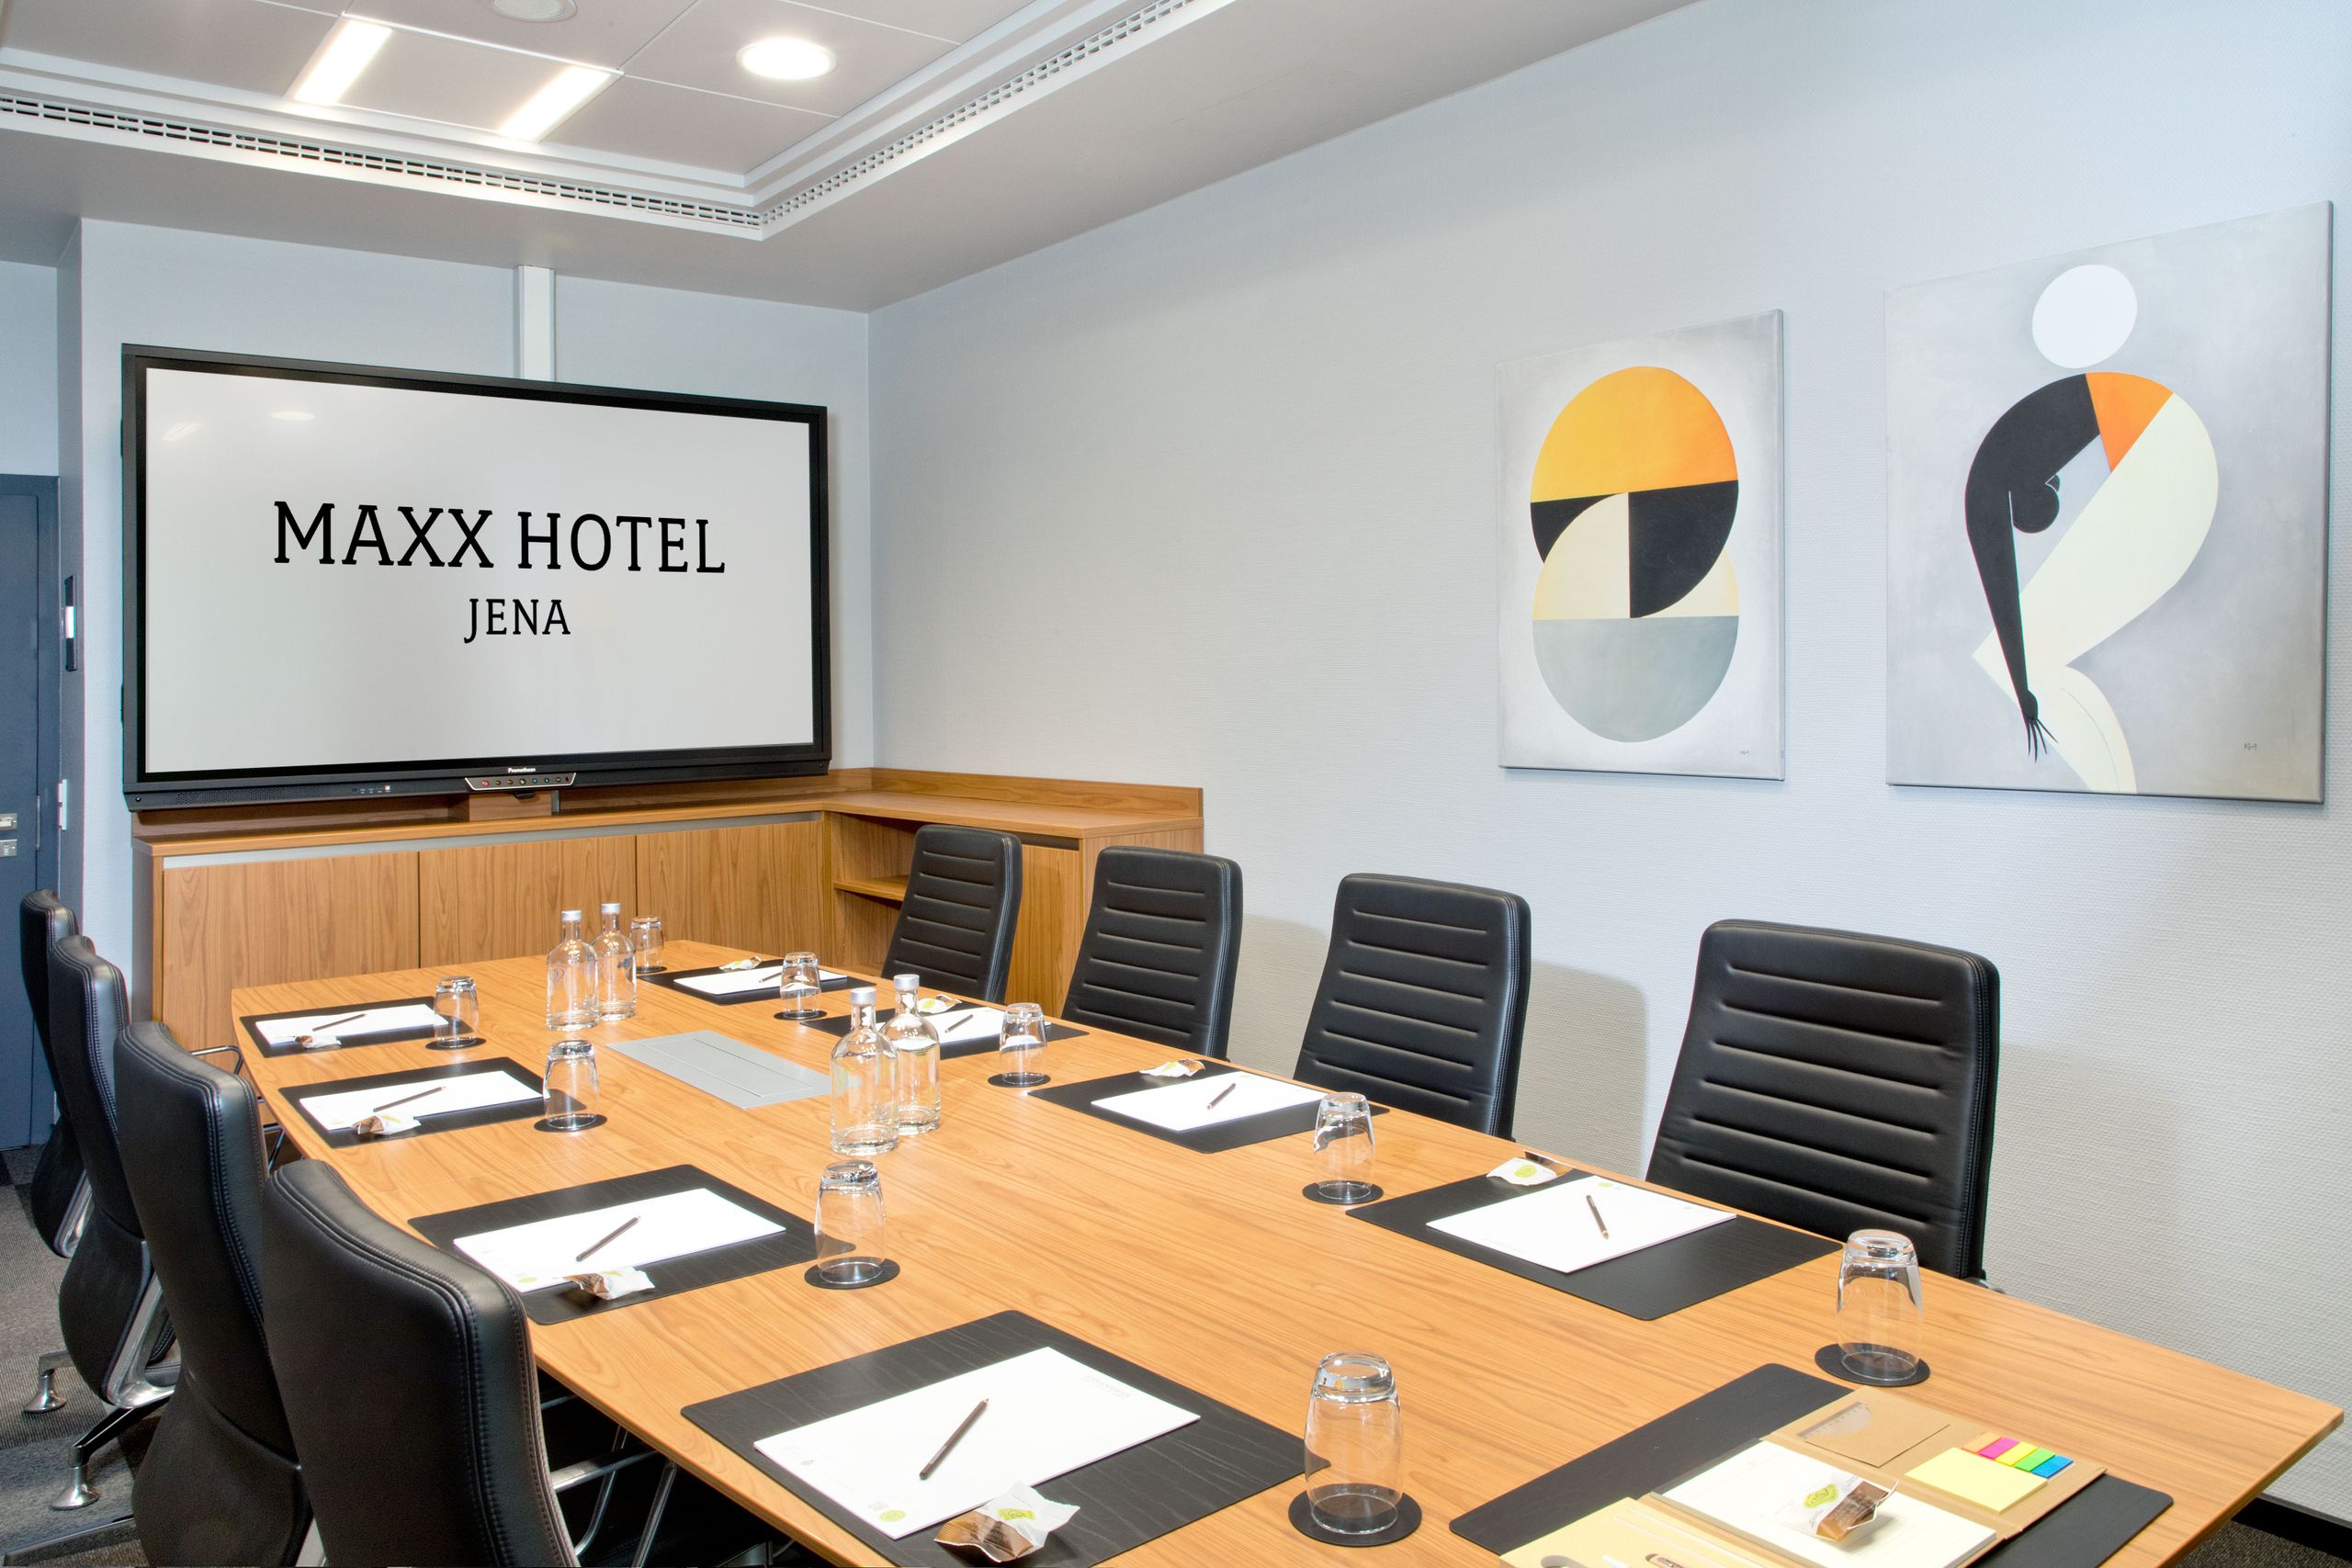 Maxx Hotel Jena - Meeting